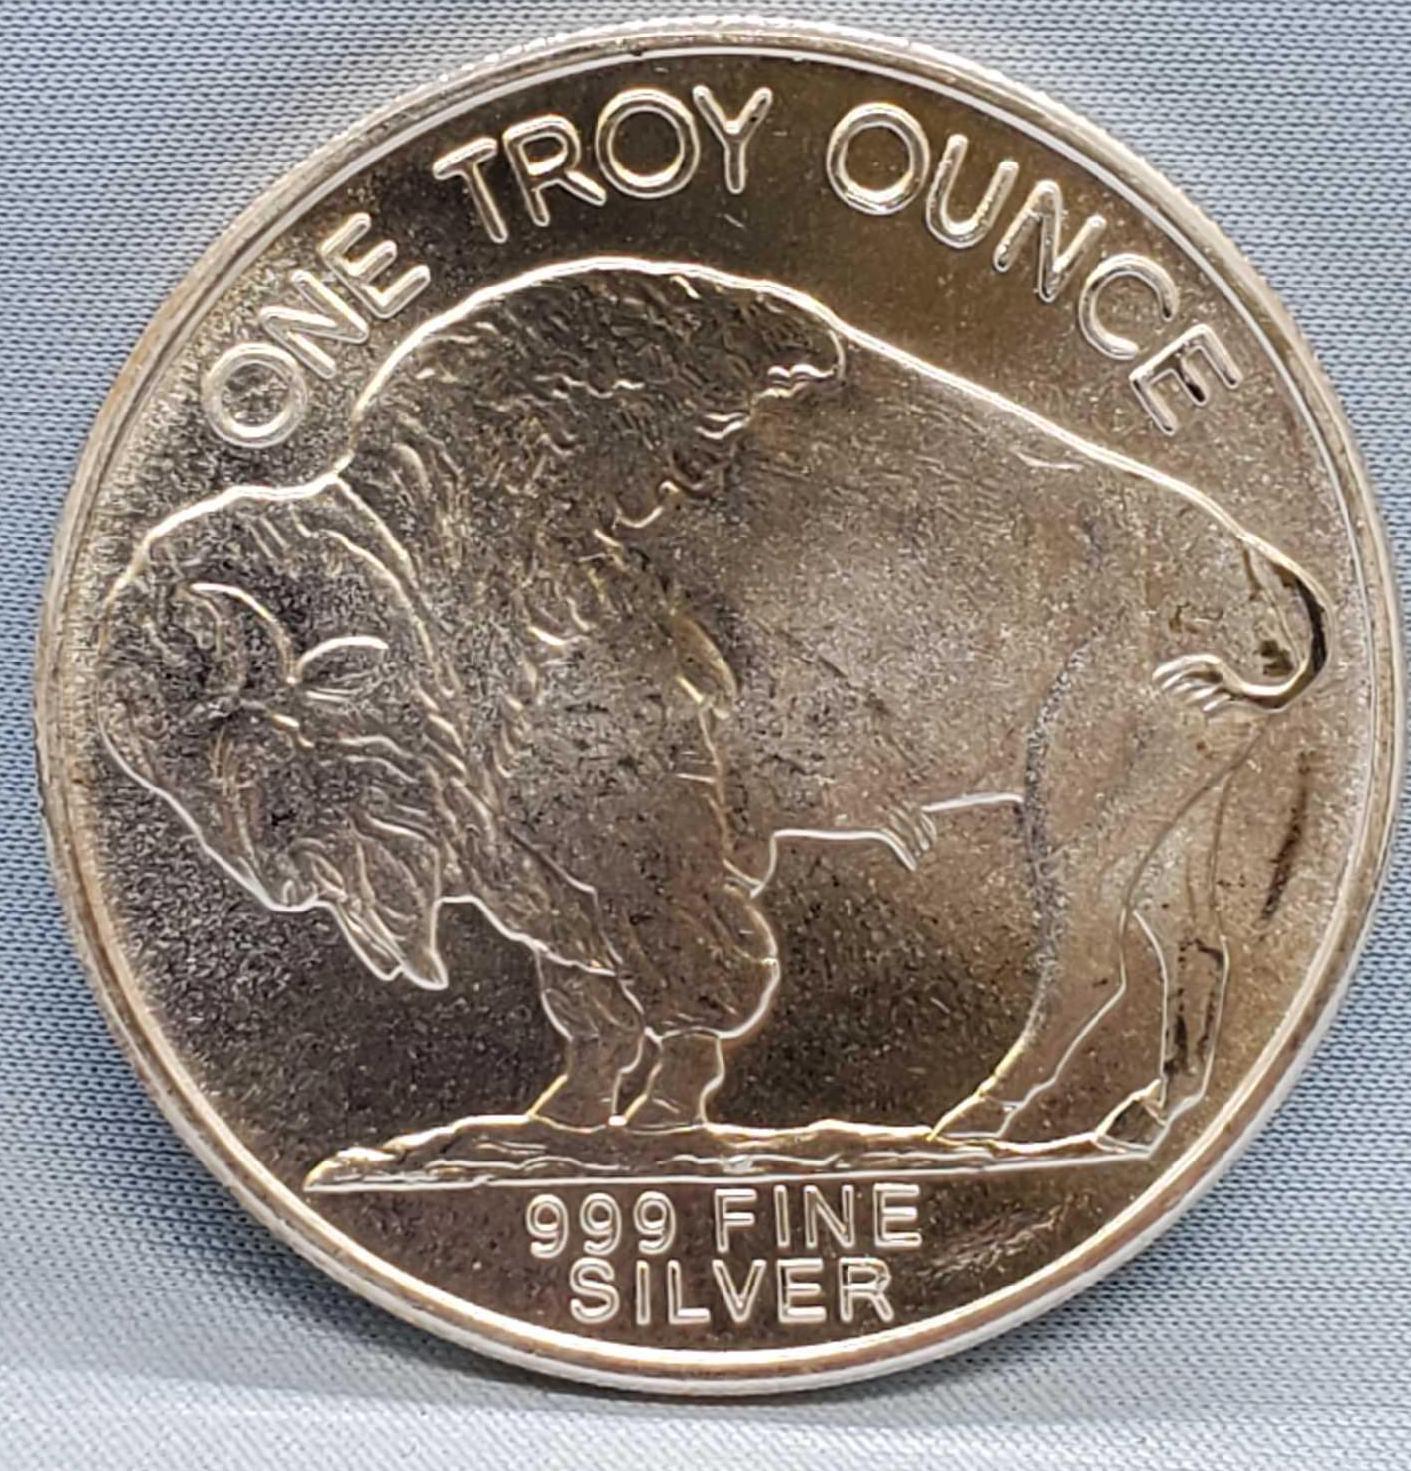 1 Troy Oz .999 Fine Silver Indian Head Buffalo Round Coin